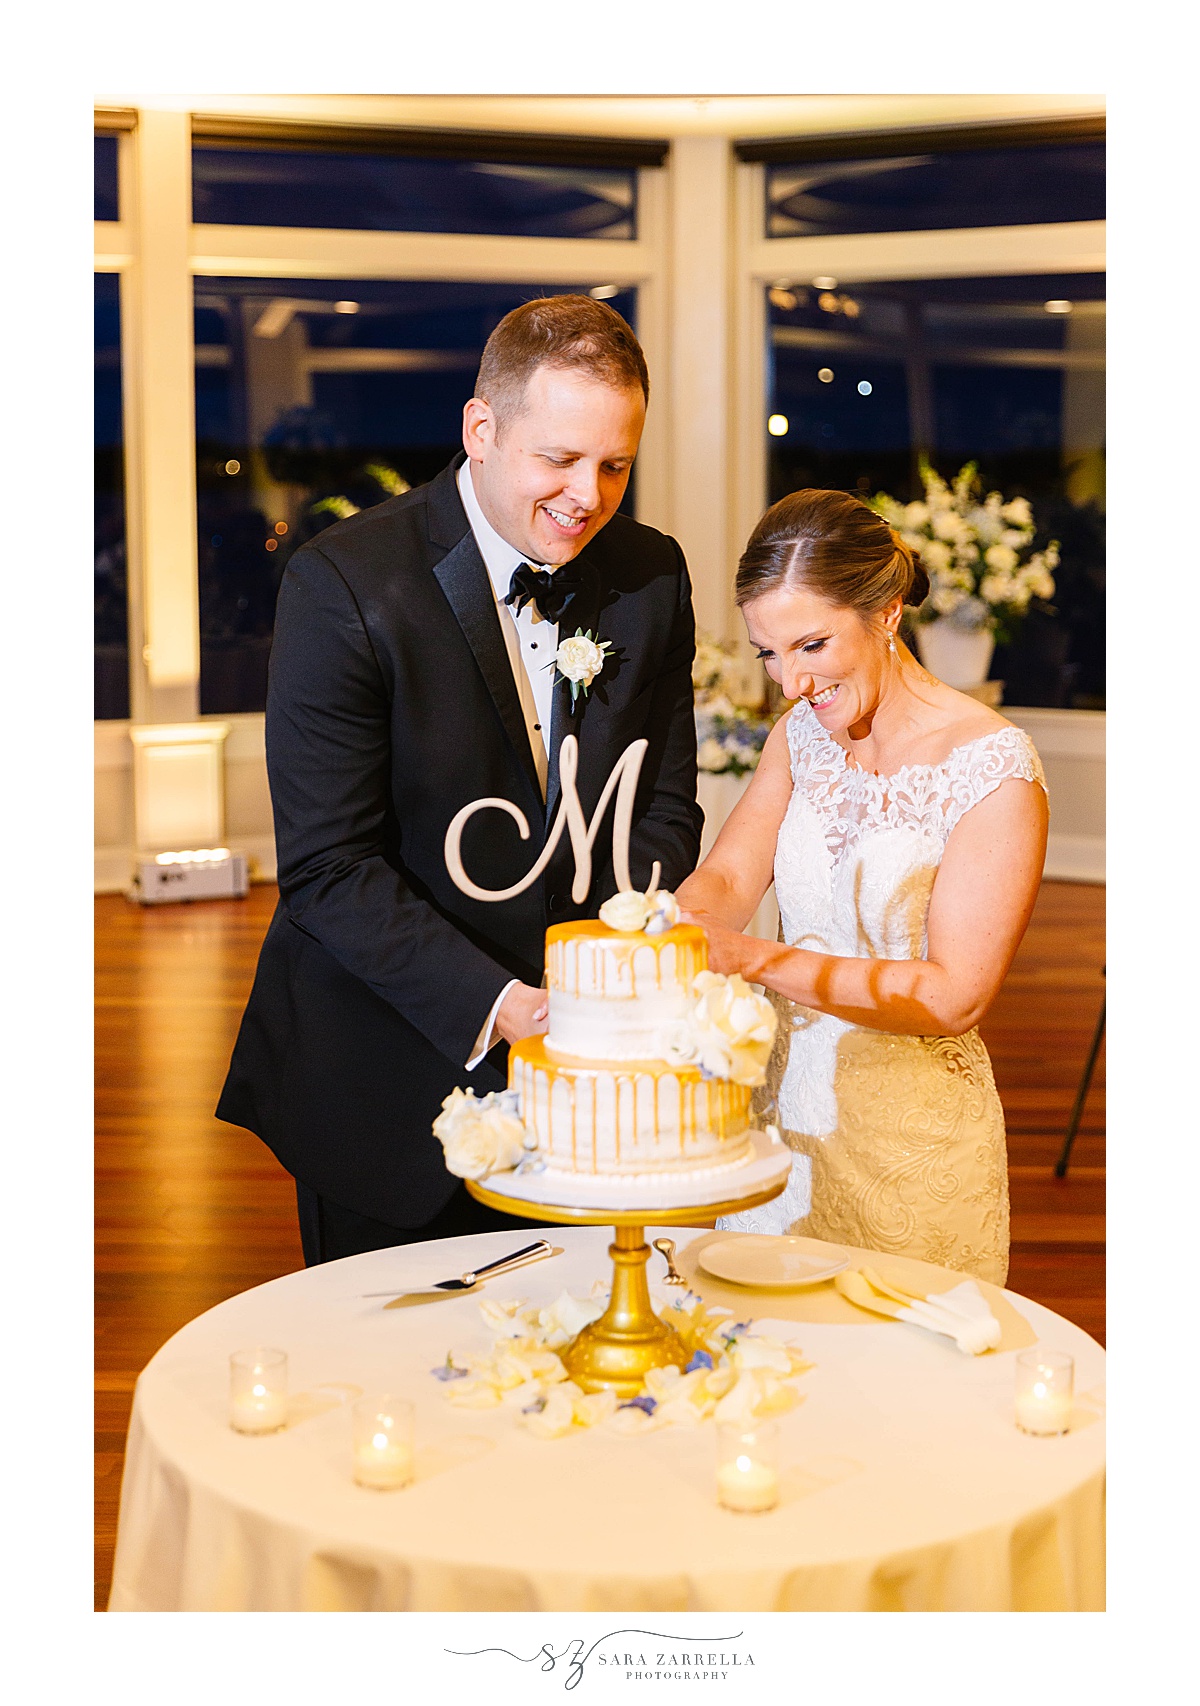 newlyweds cut wedding cake at OceanCliff Hotel Wedding reception